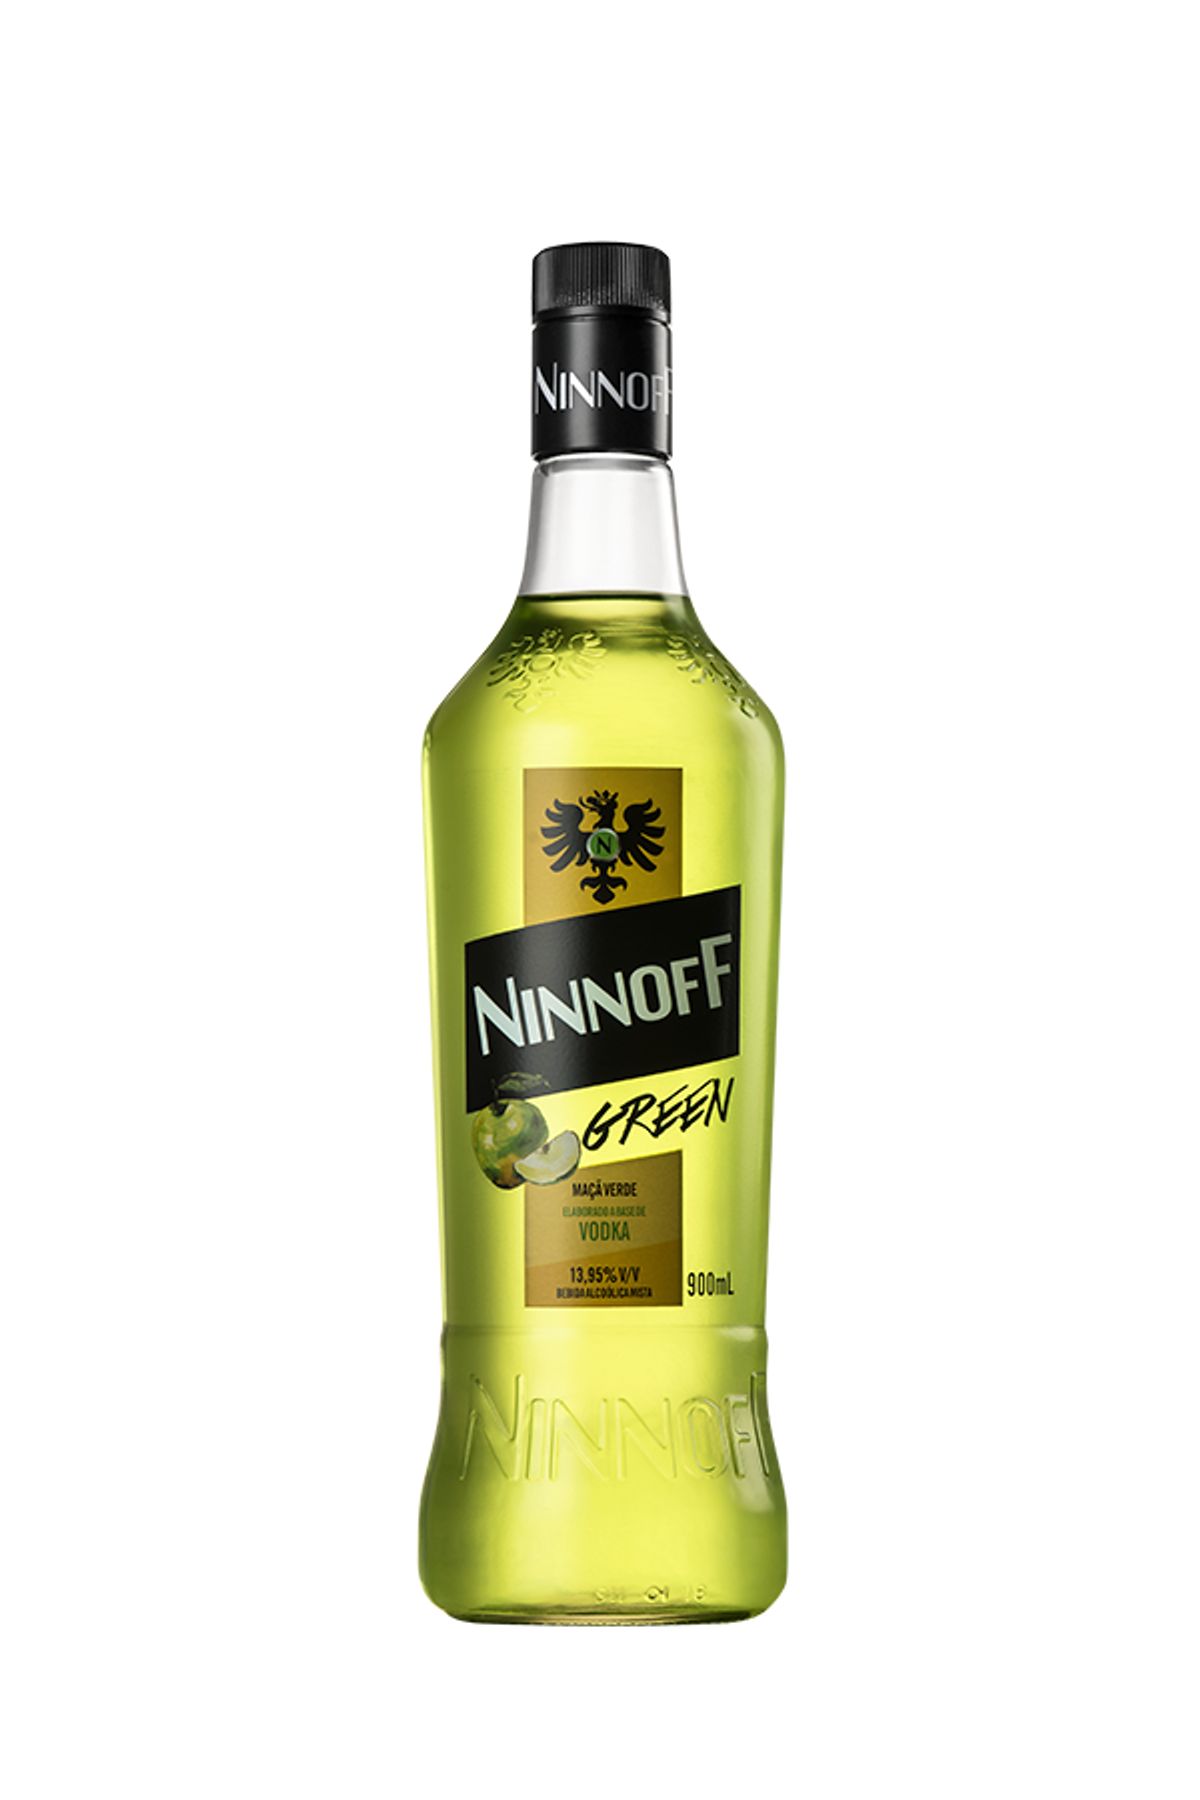 Bebida Alcoólica Mista Ninnoff Maçã Verde Garrafa 900ml